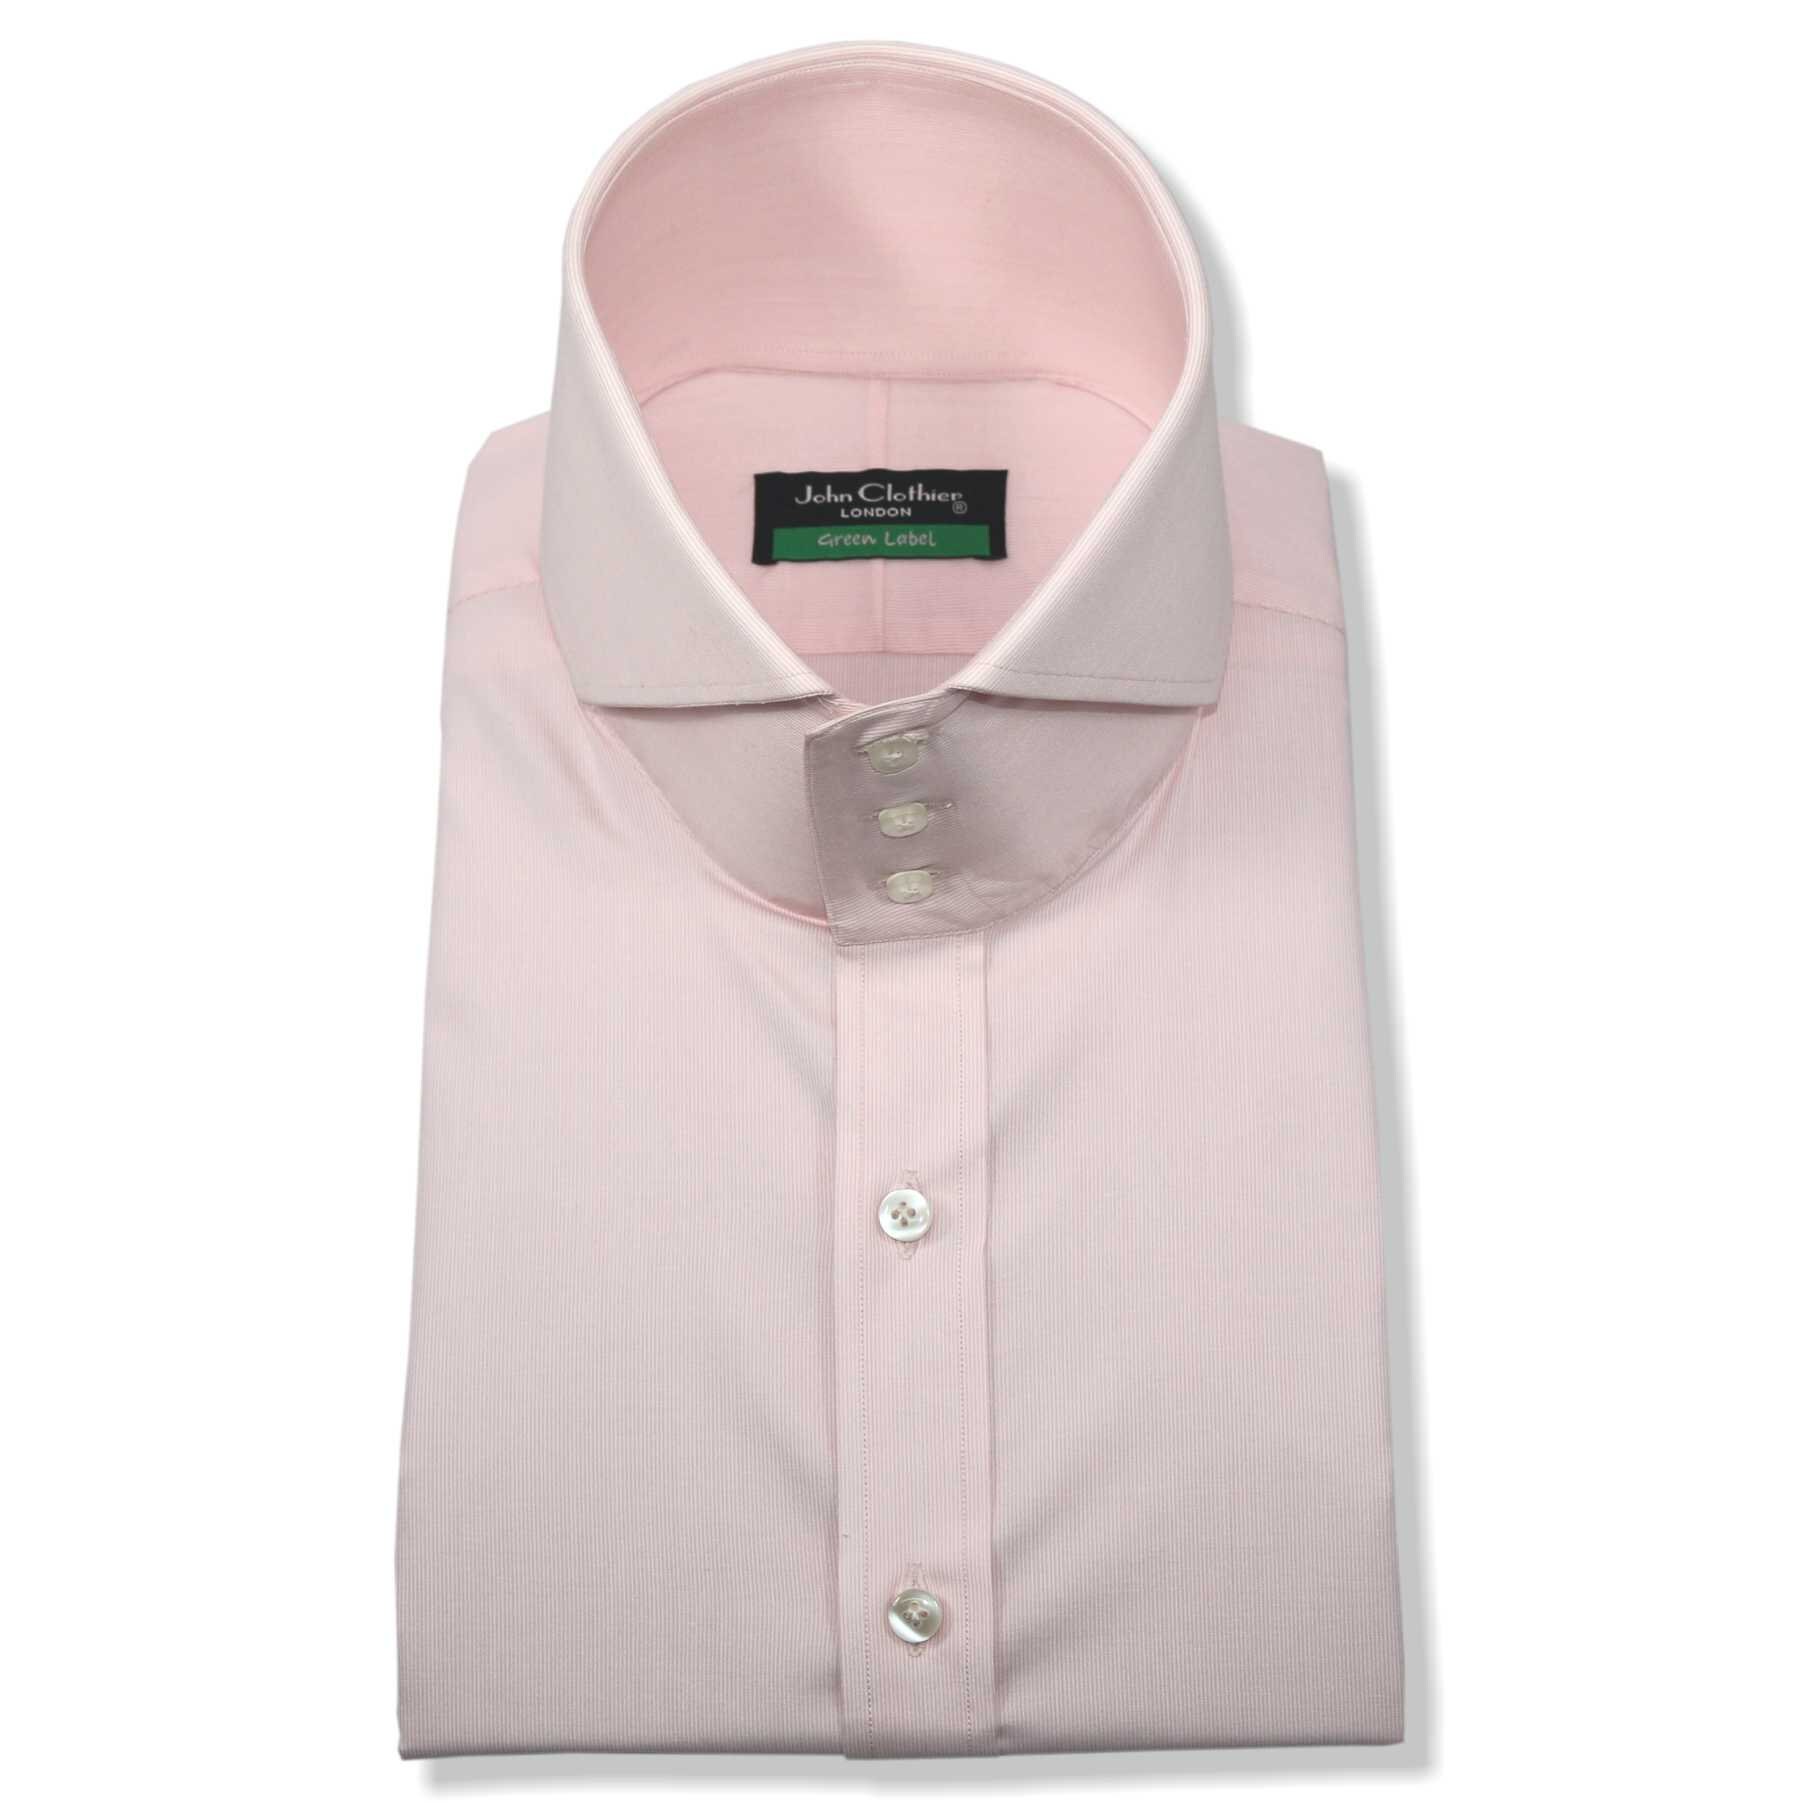 Mens High collar shirt Pink Tall Neck Italian collar Cut away | Etsy